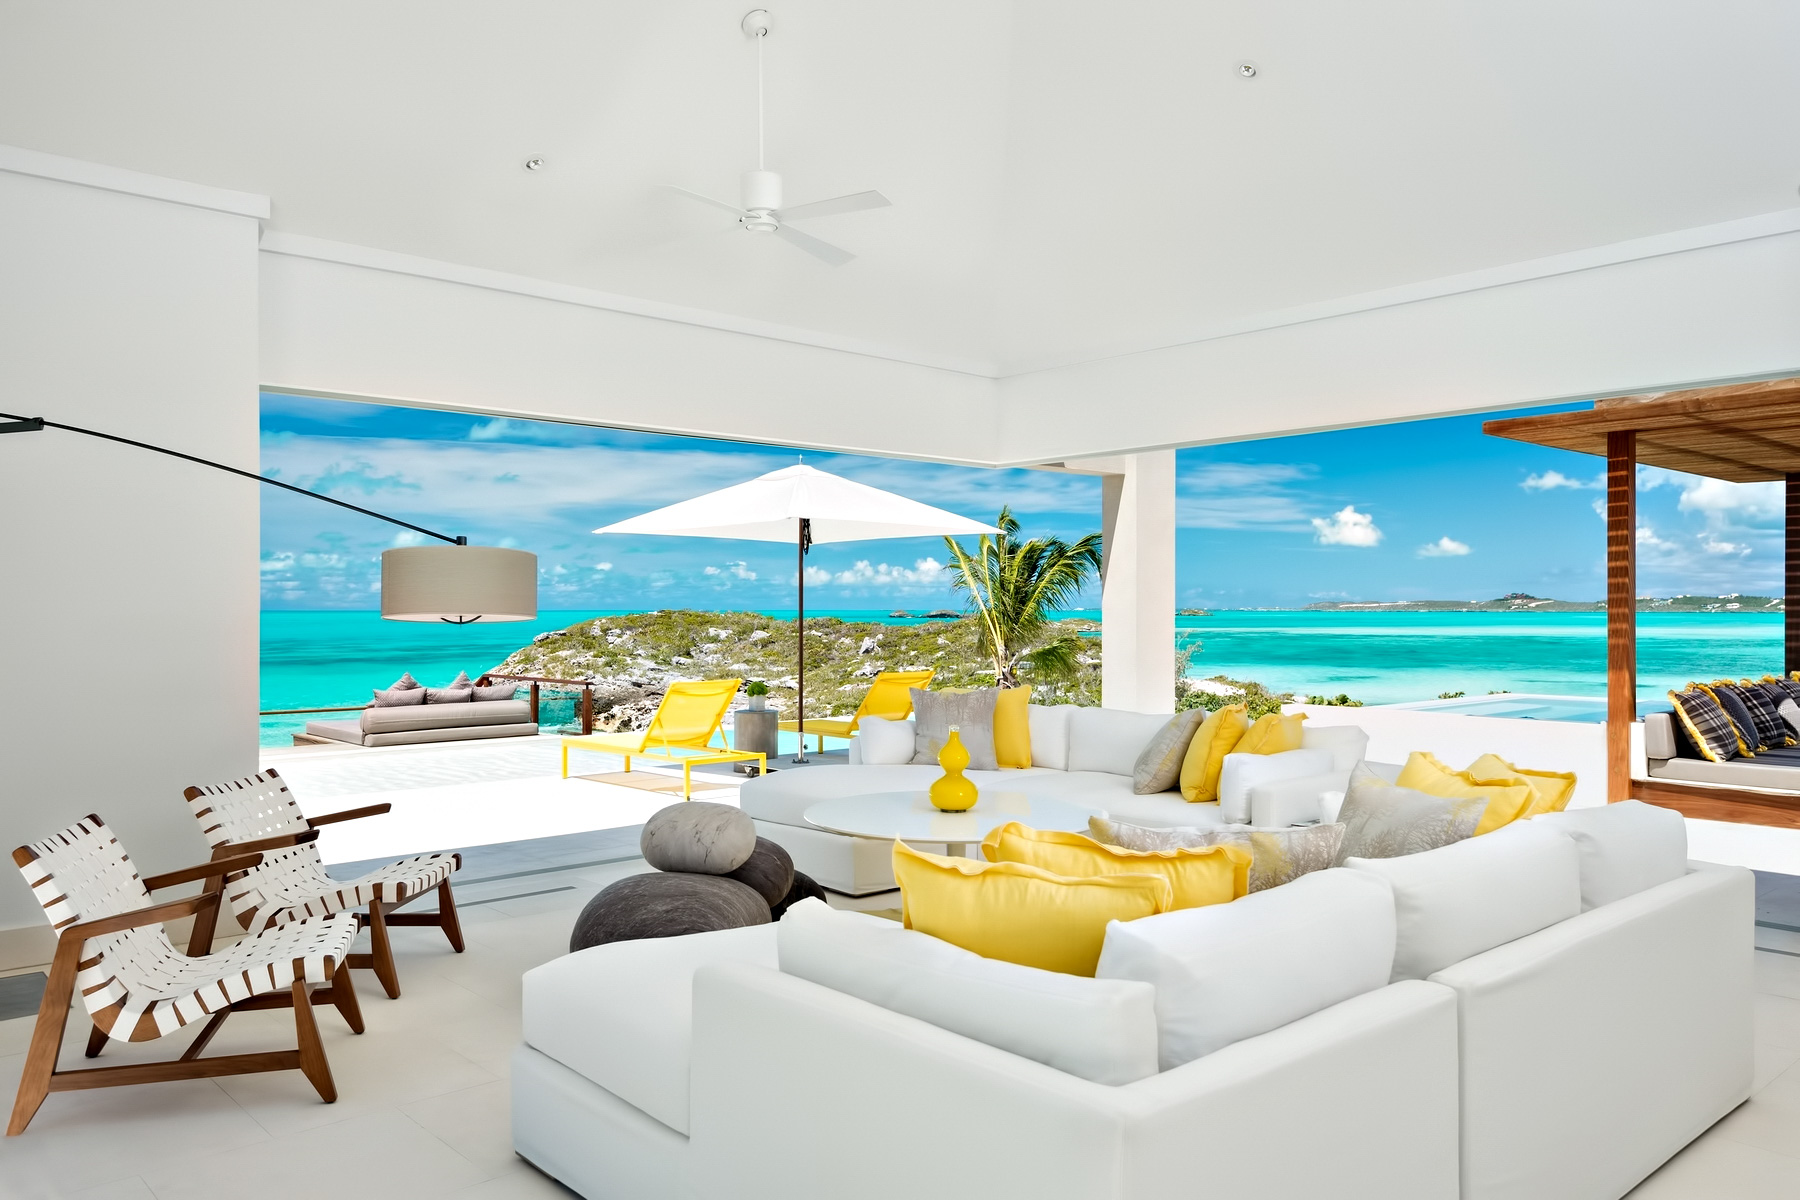 Turtle Tail Luxury Estate Villa - Providenciales, Turks and Caicos Islands